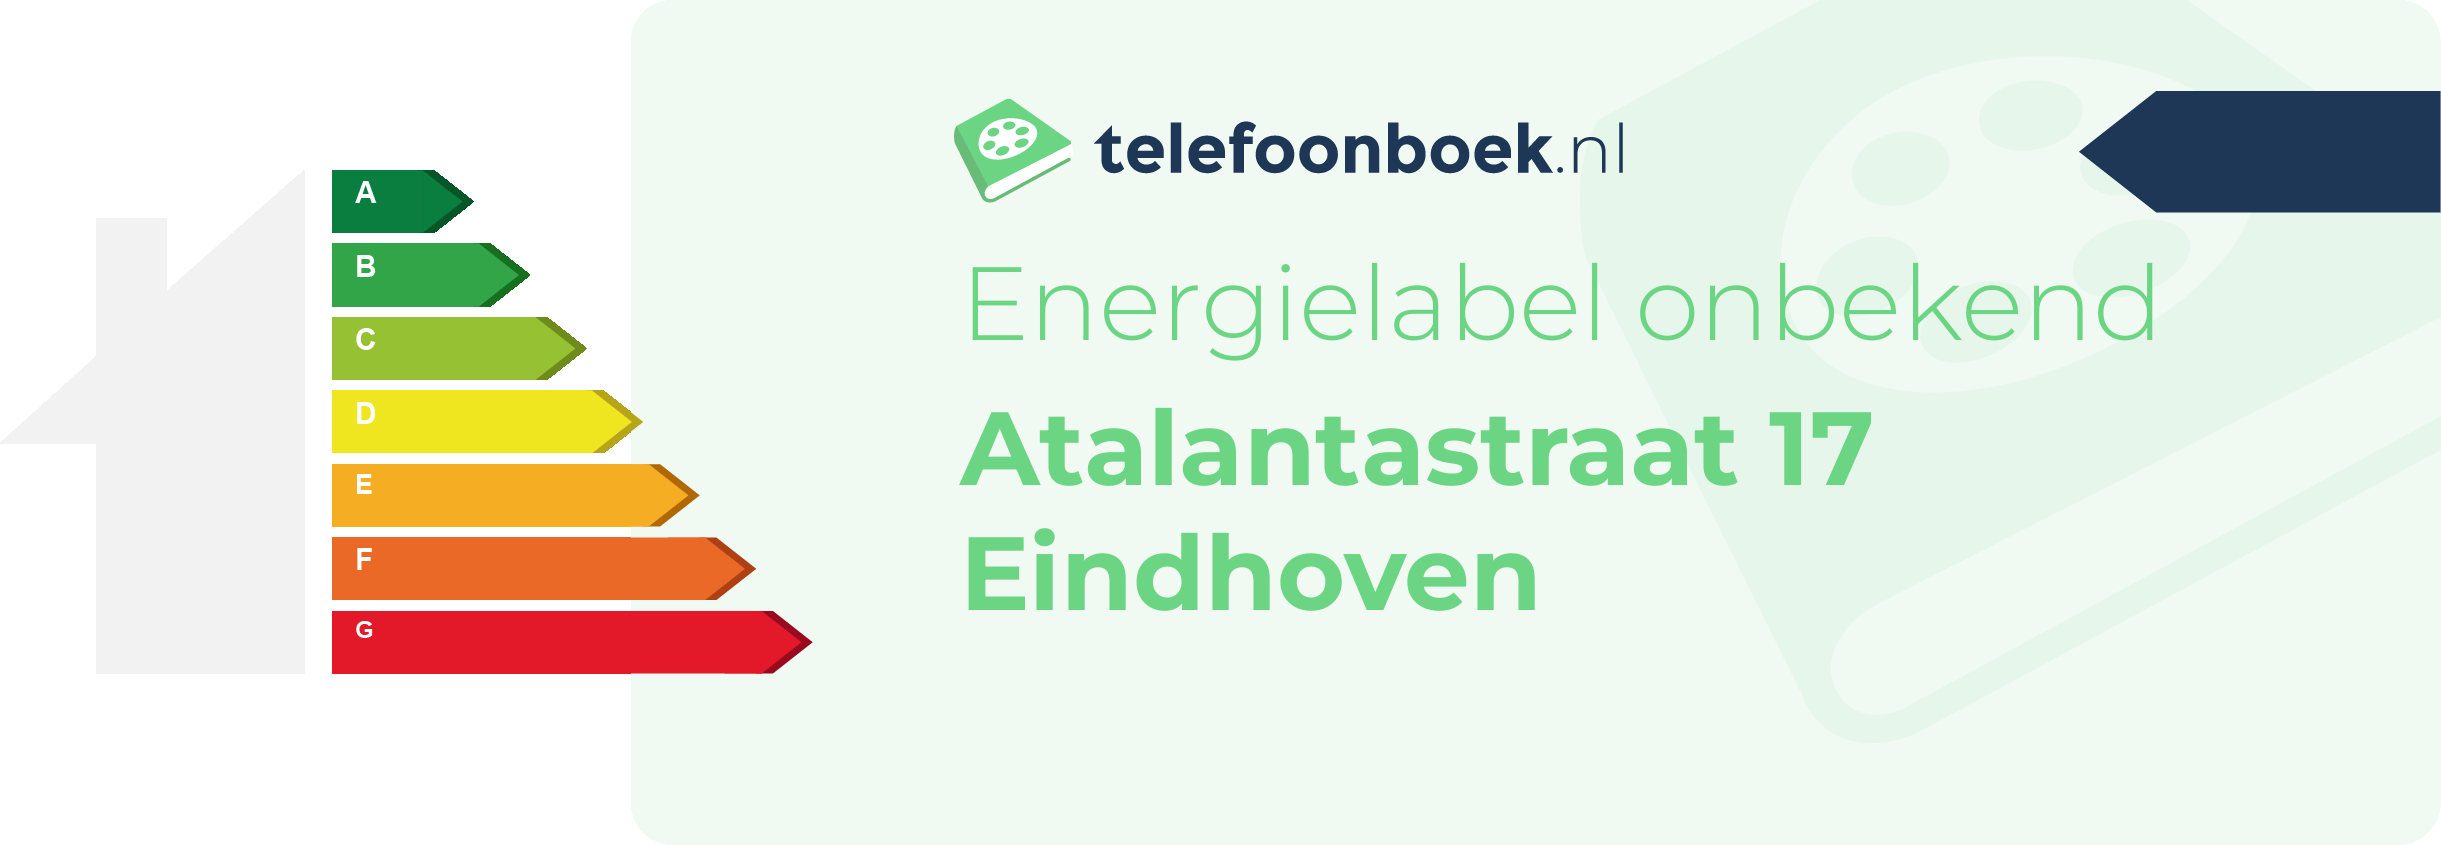 Energielabel Atalantastraat 17 Eindhoven